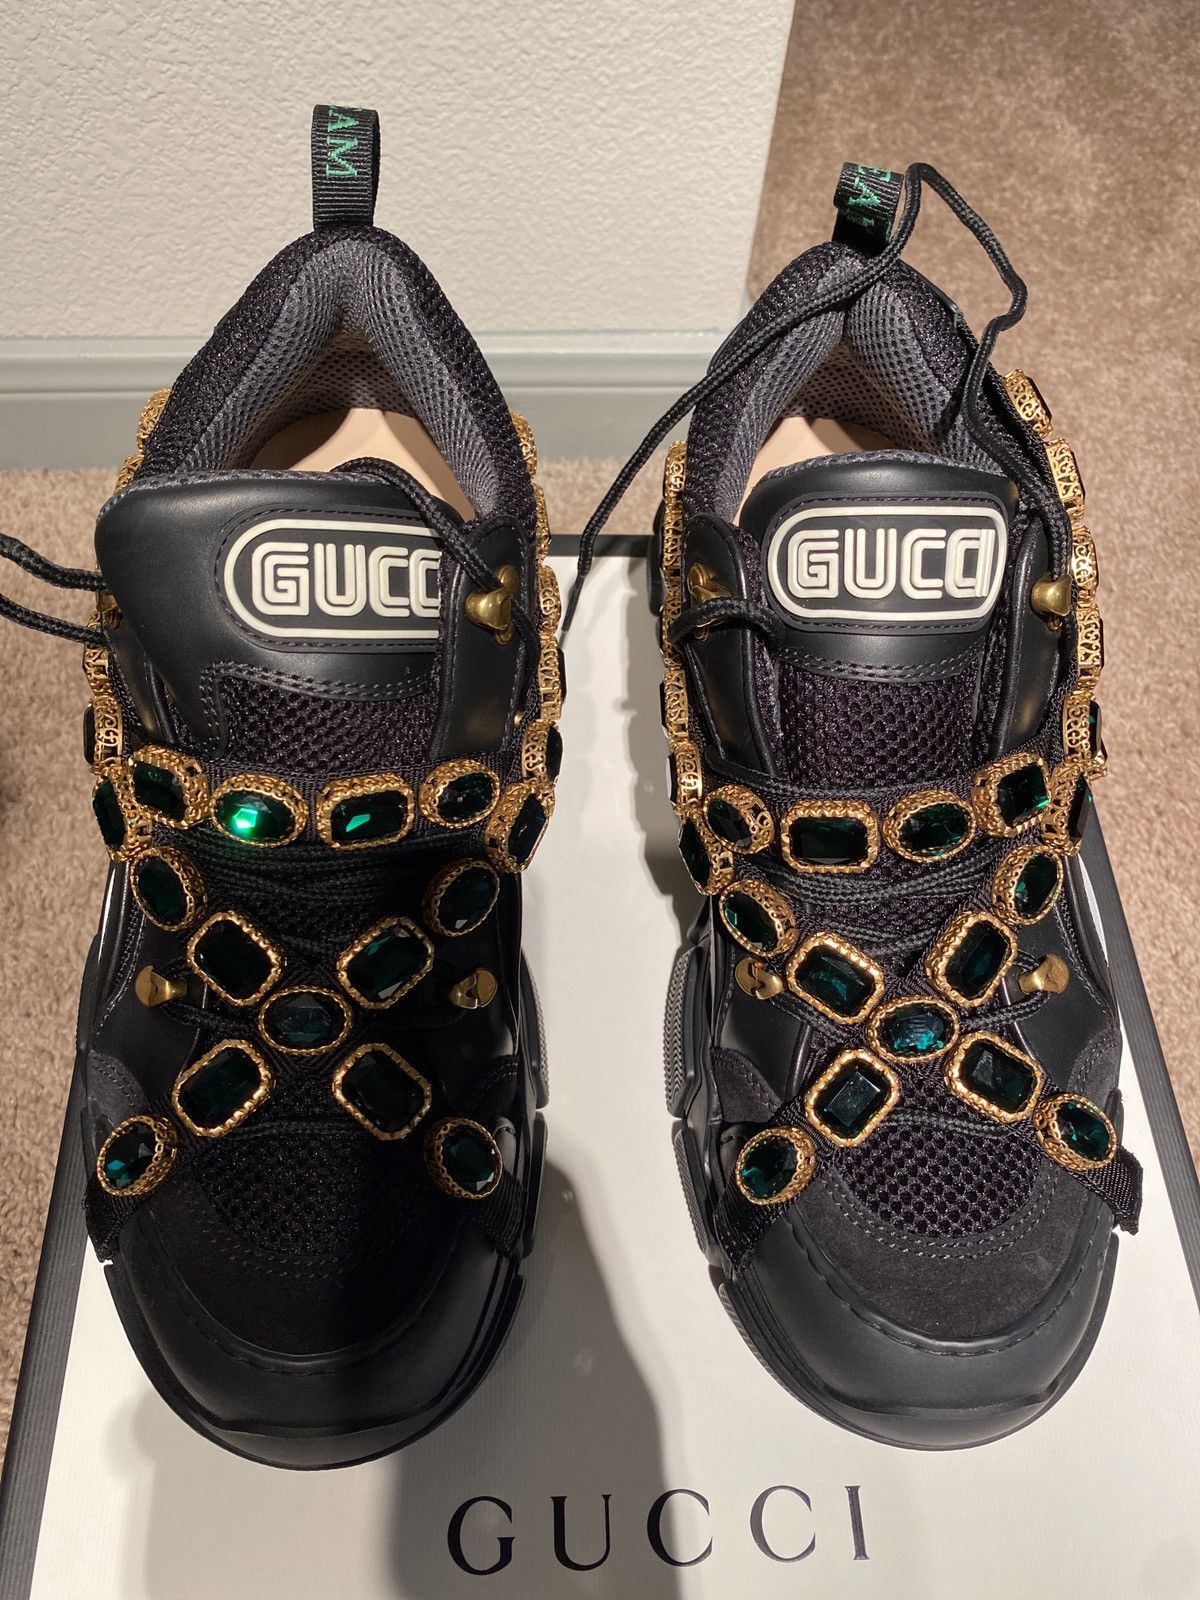 Gucci Gucci Flash Trek Sneakers Size US 9.5 / EU 42-43 - 5 Thumbnail